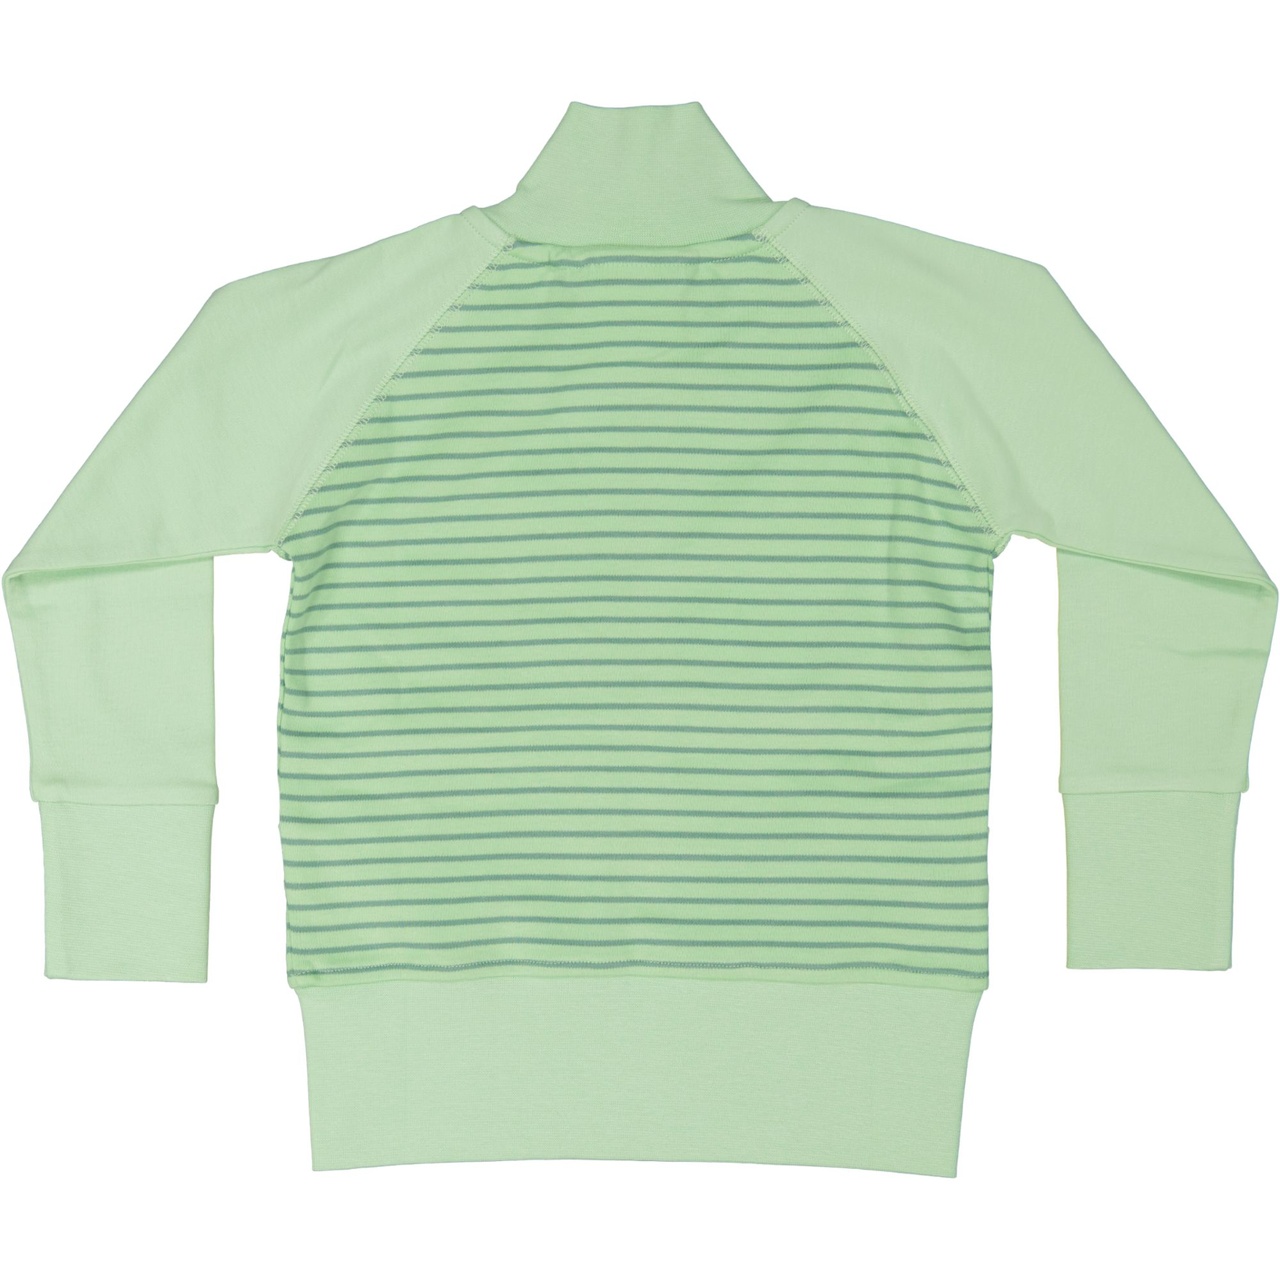 Zip sweater L.green/green  74/80